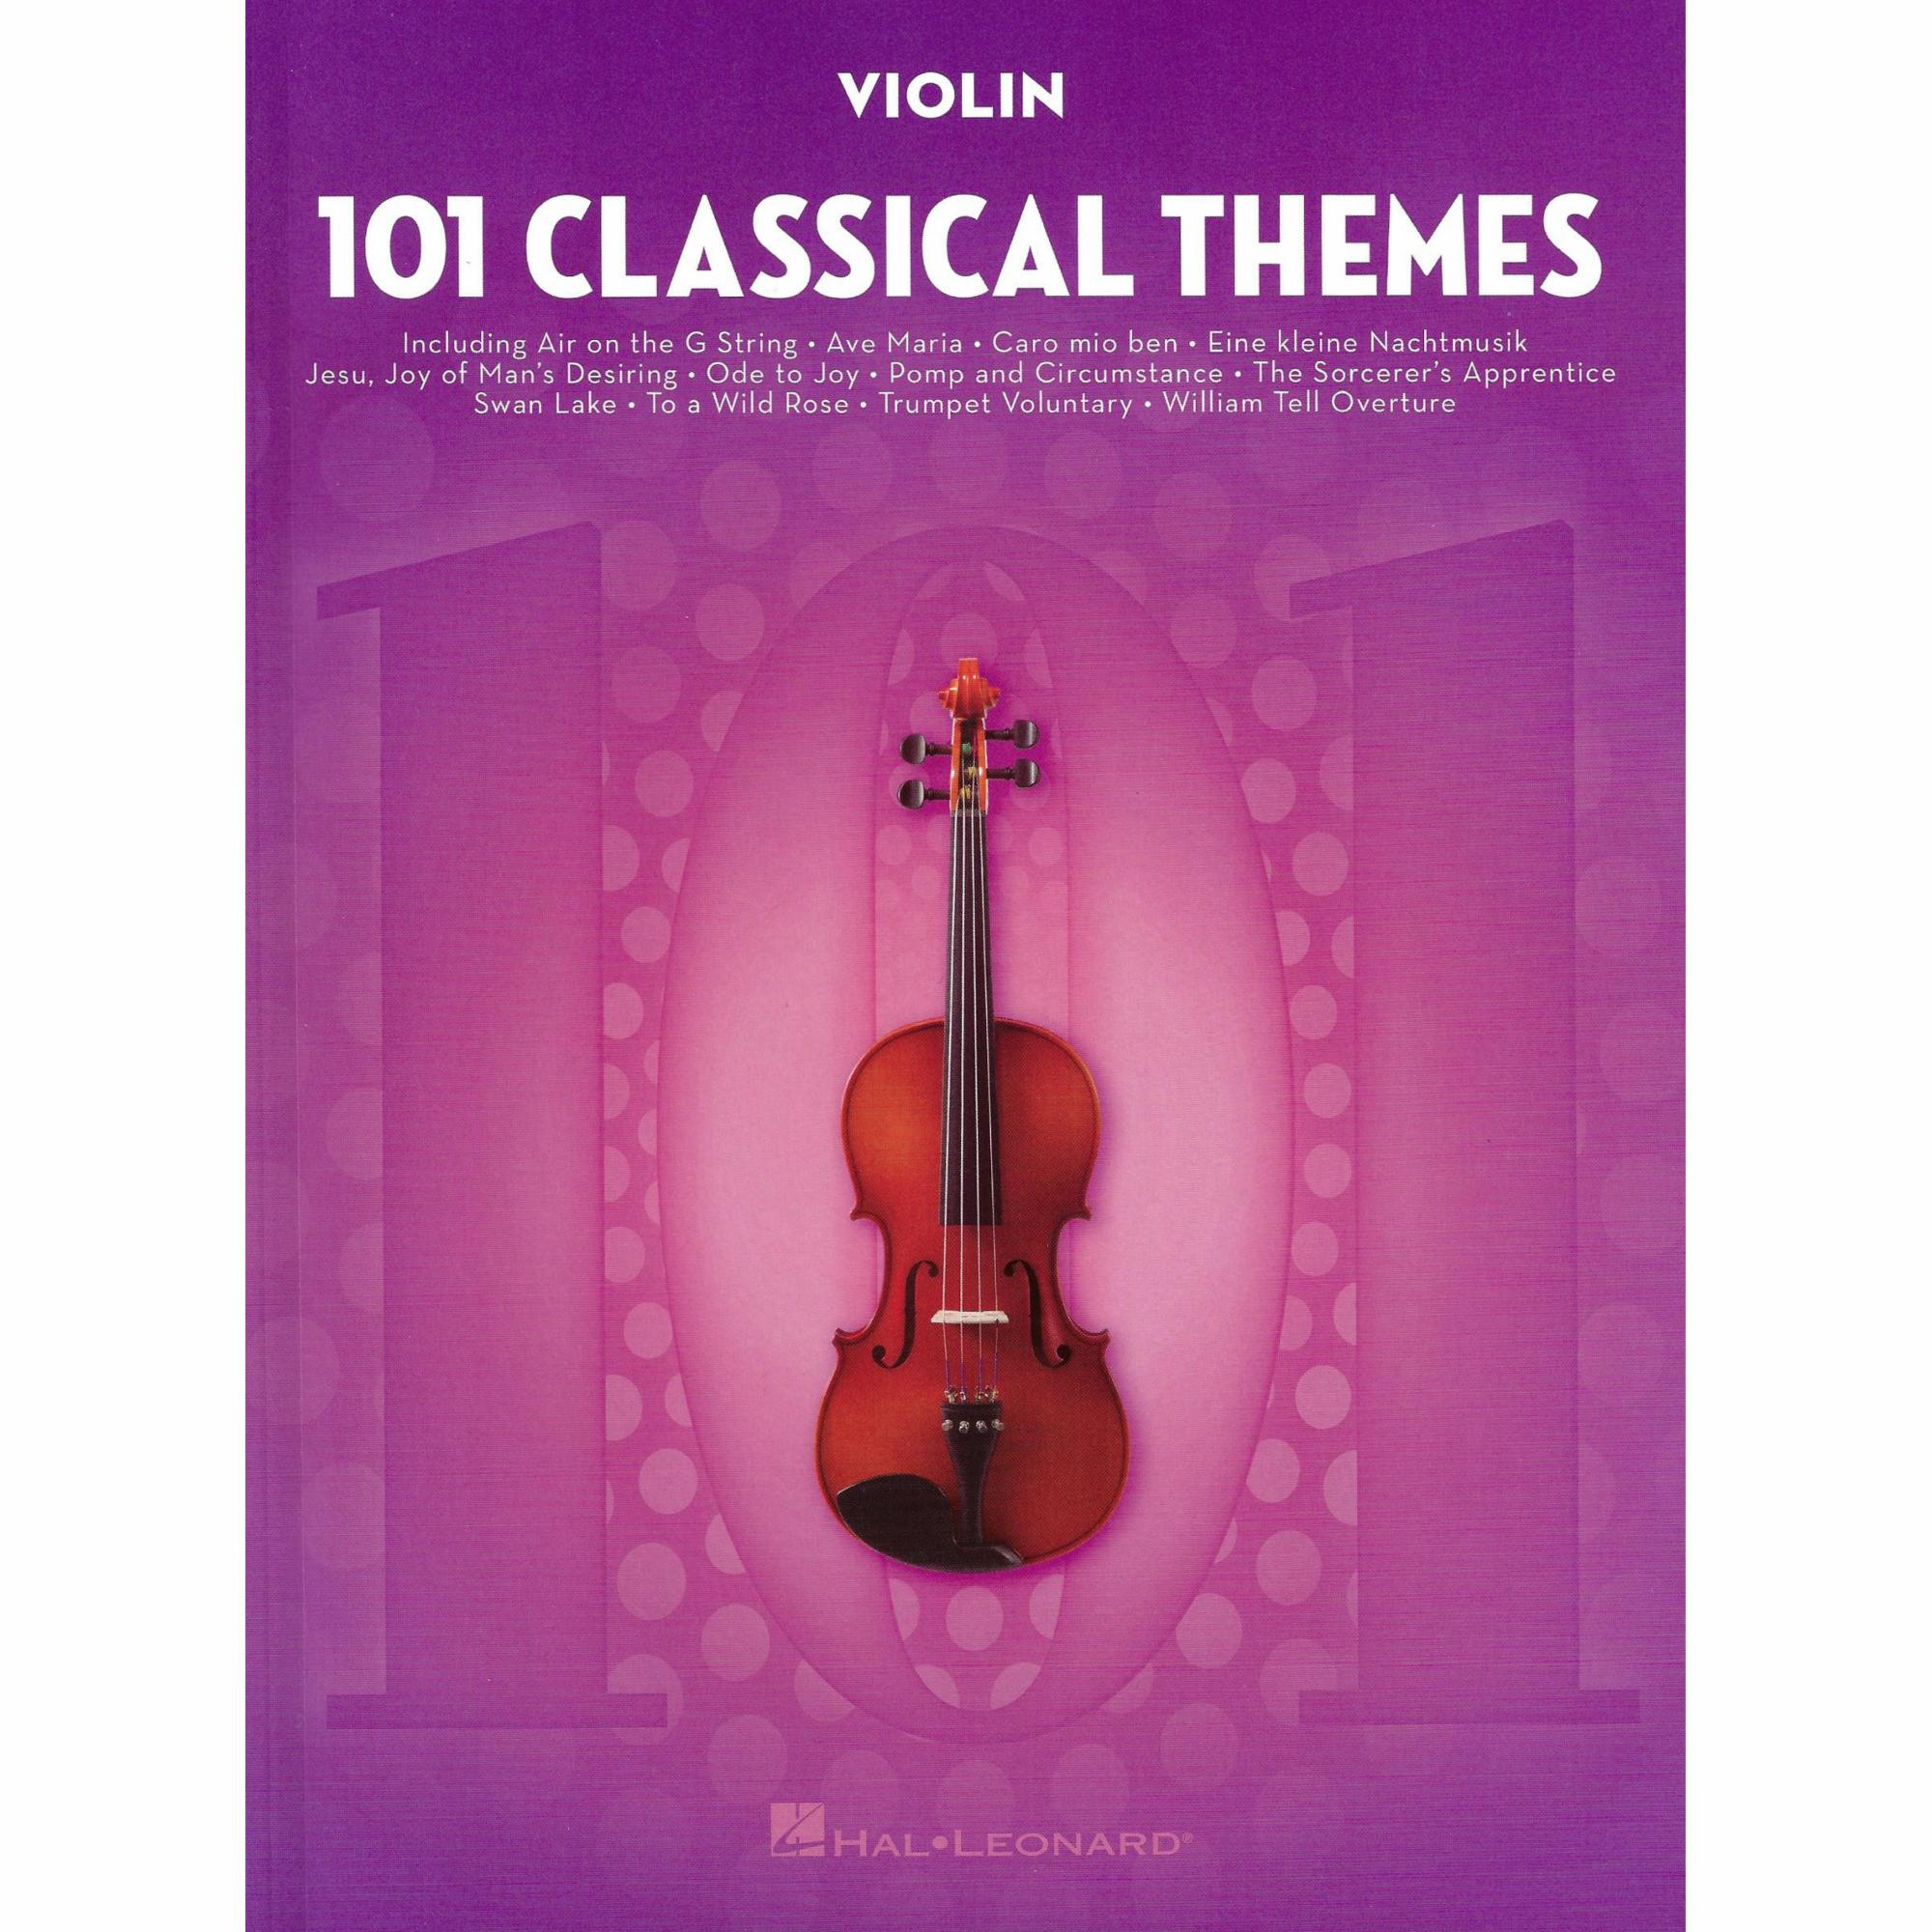 101 Classical Themes for Violin, Viola, or Cello